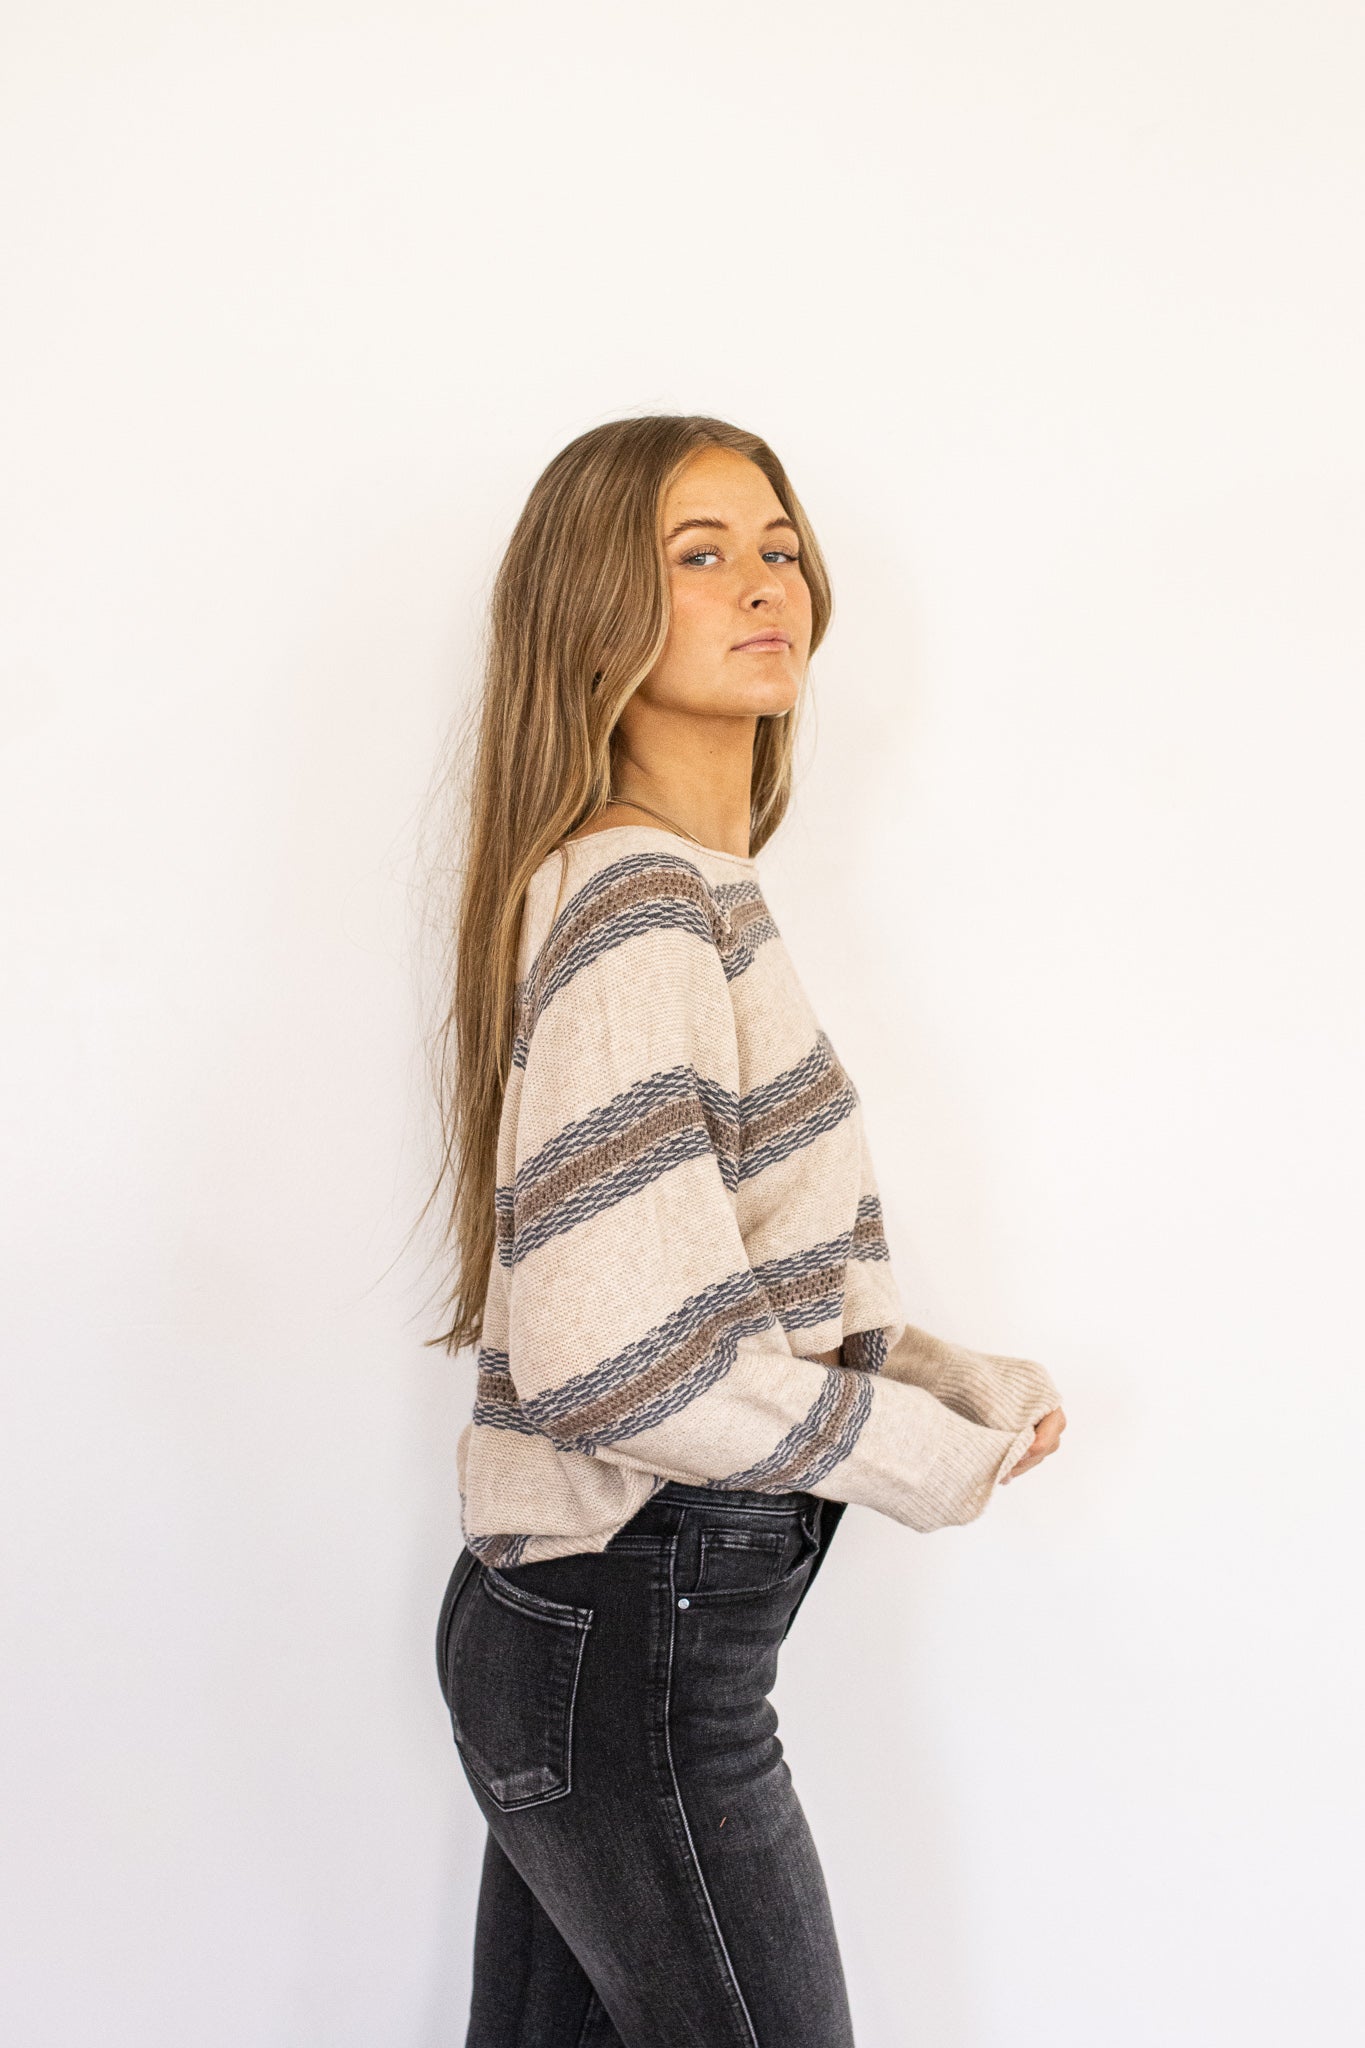 Rachel Green Sweater